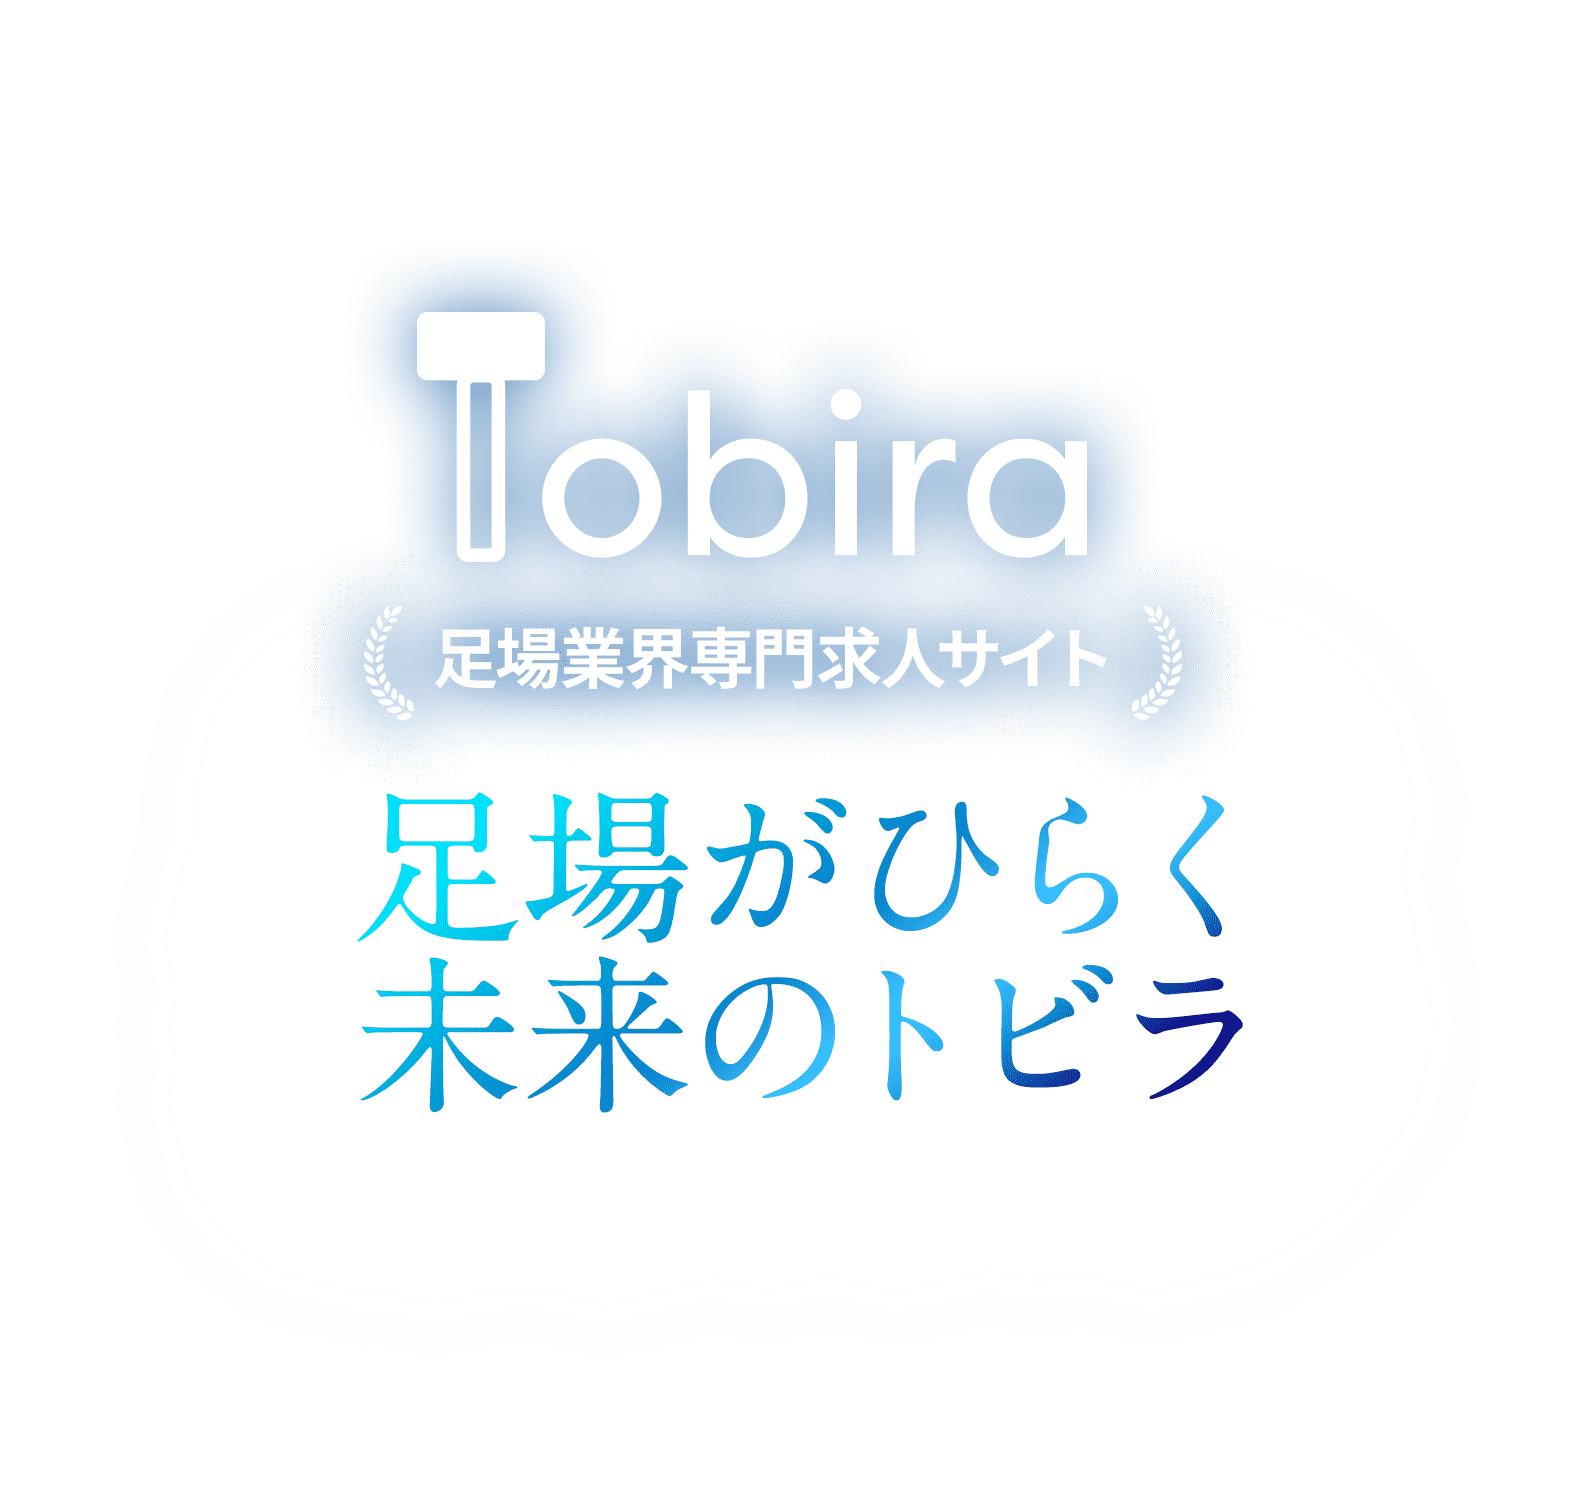 Tobira - 足場業界専門求人サイト 足場がひらく未来のトビラ